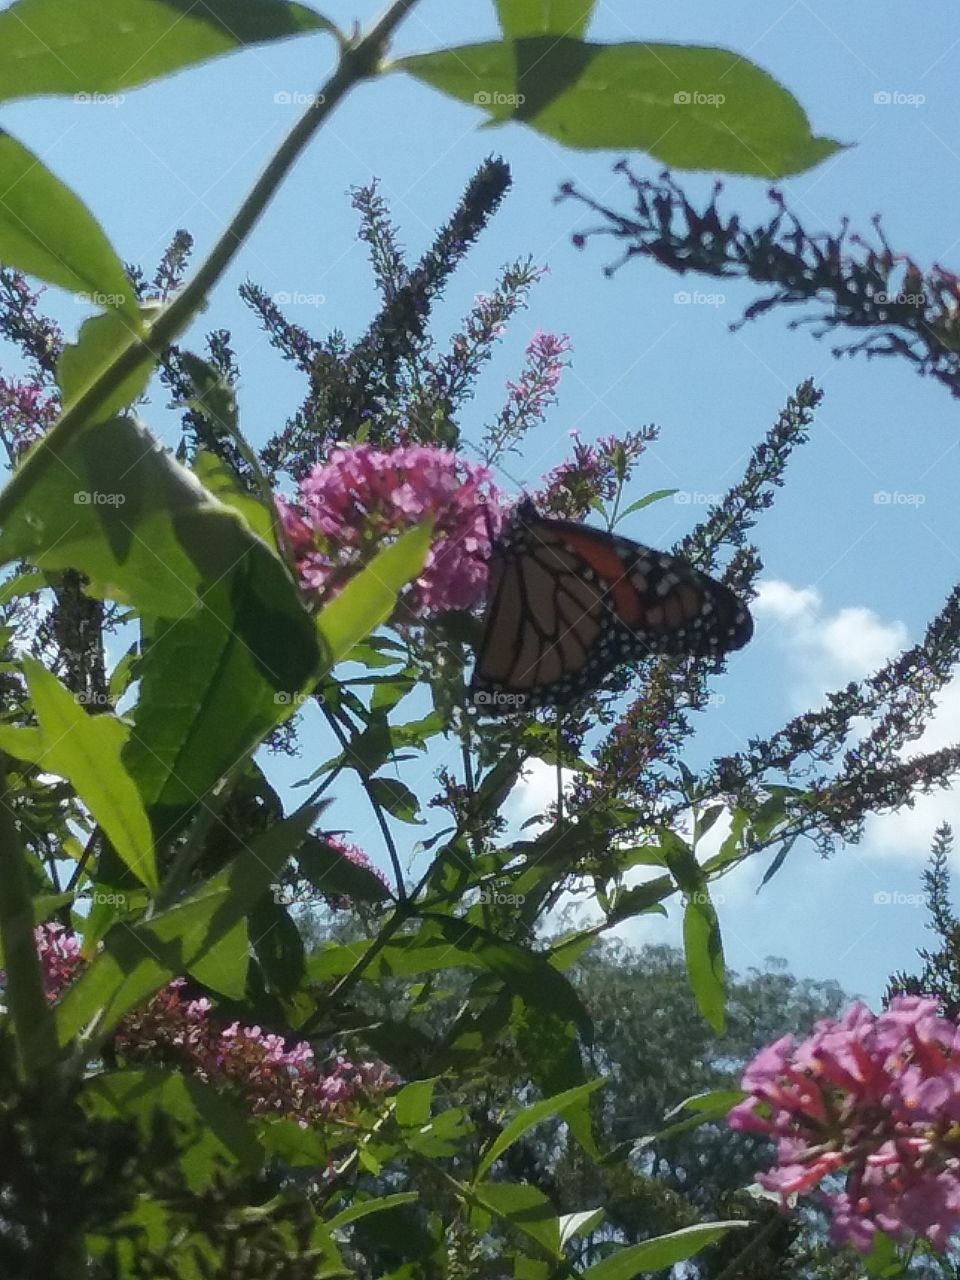 The butterfly Bush